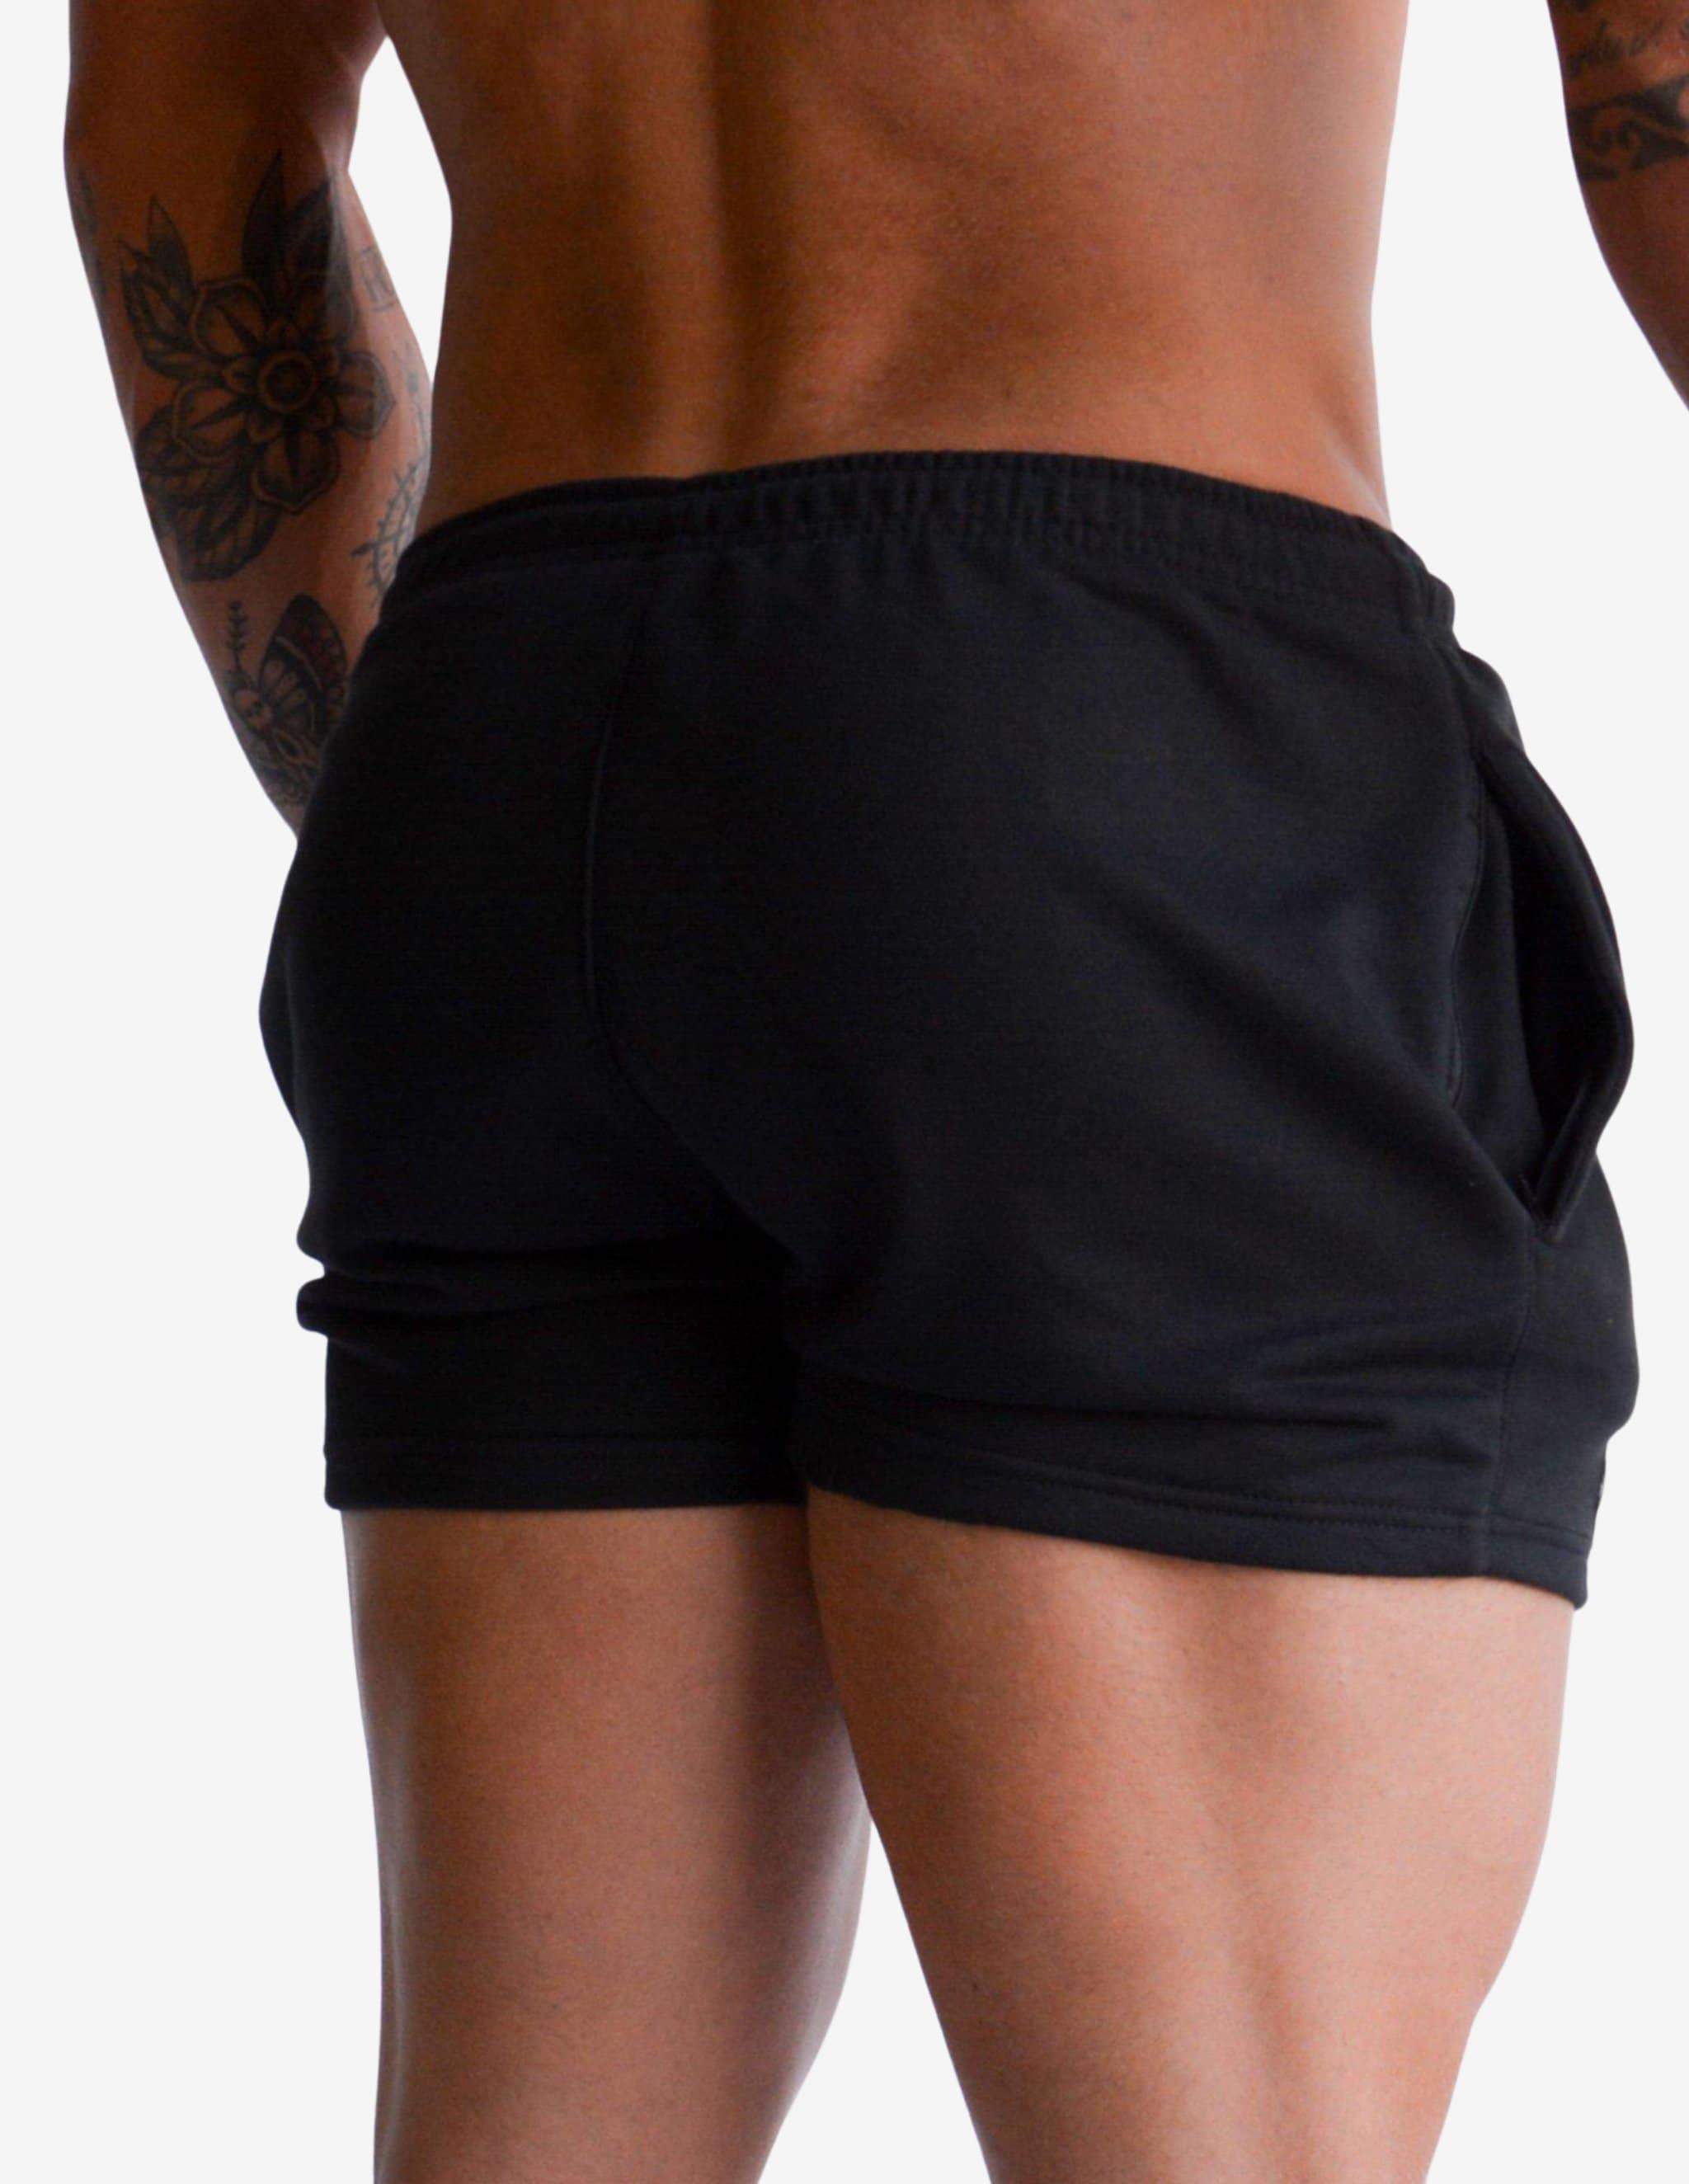 FKNLIFT Black-Shorts Man-FKN Gym Wear-Guru Muscle